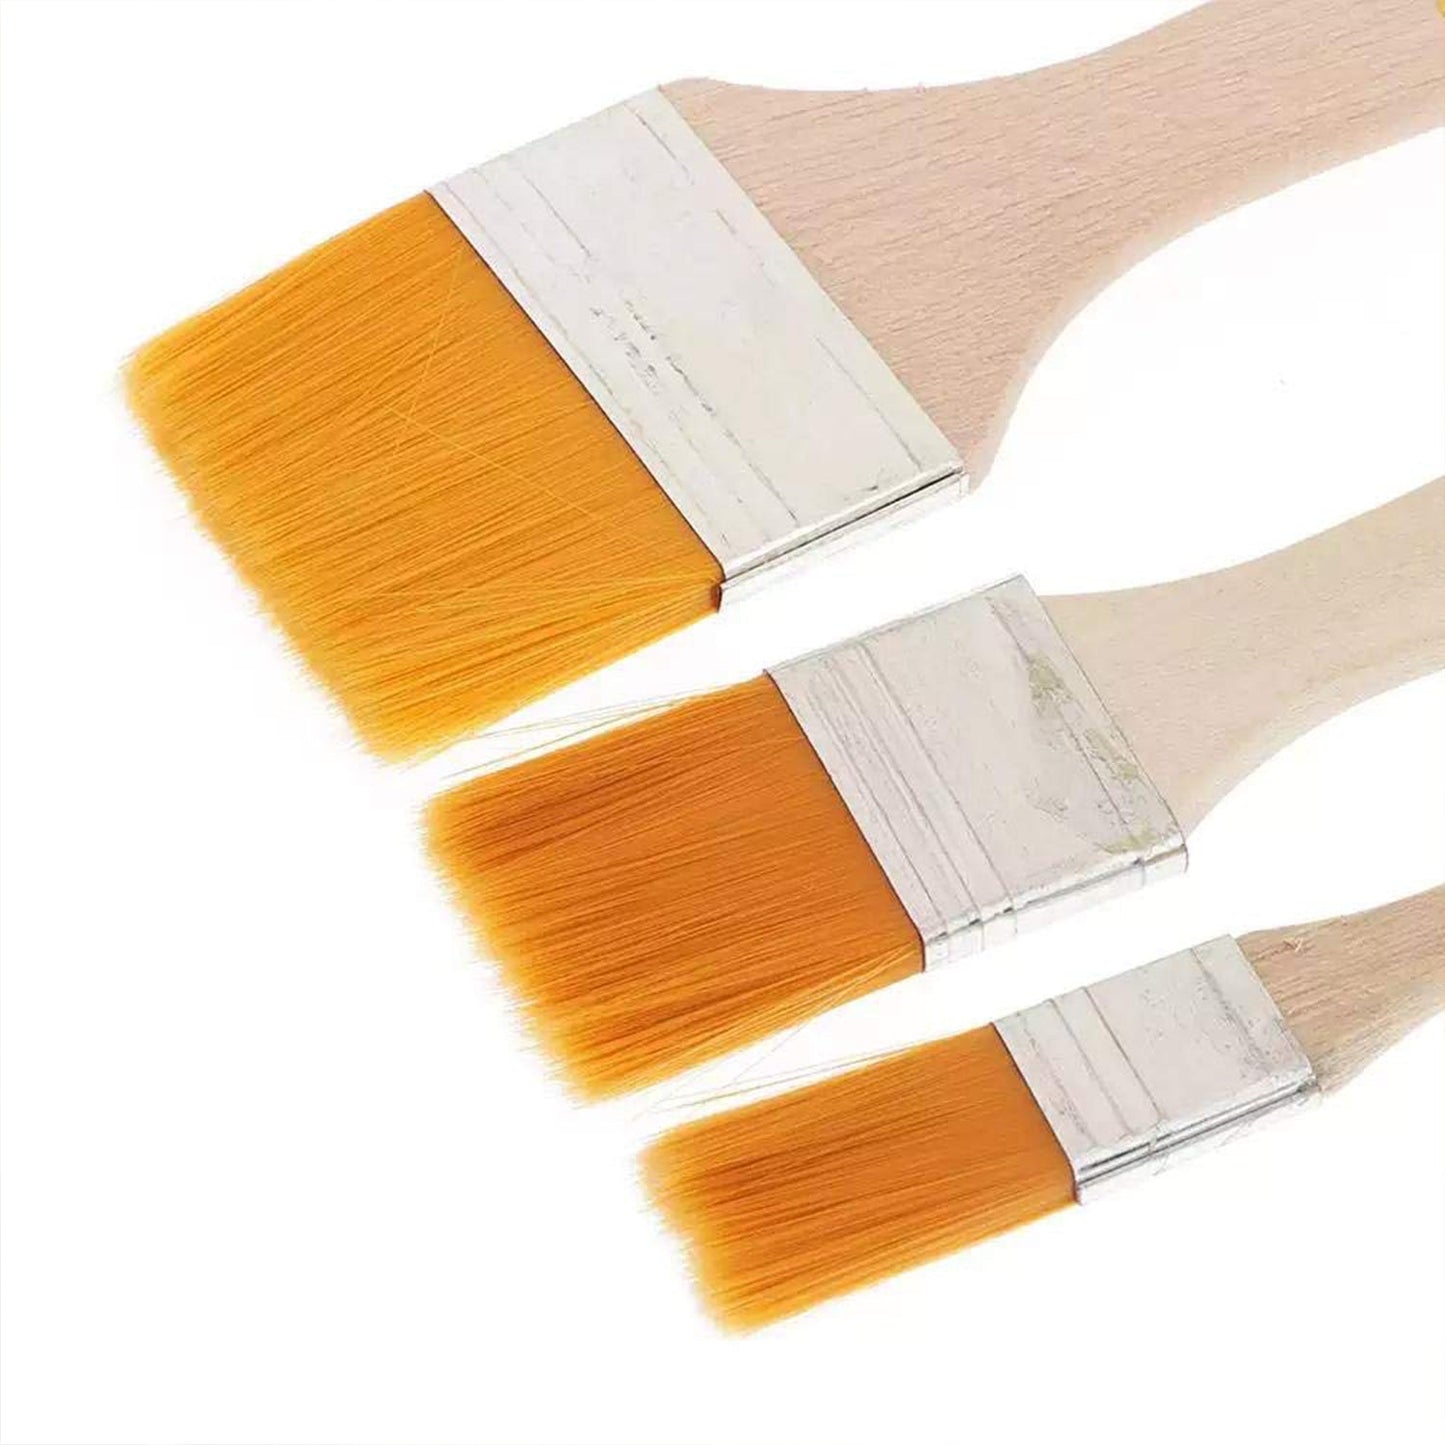 4675 Artistic Flat Painting Brush - Set of 6 DeoDap